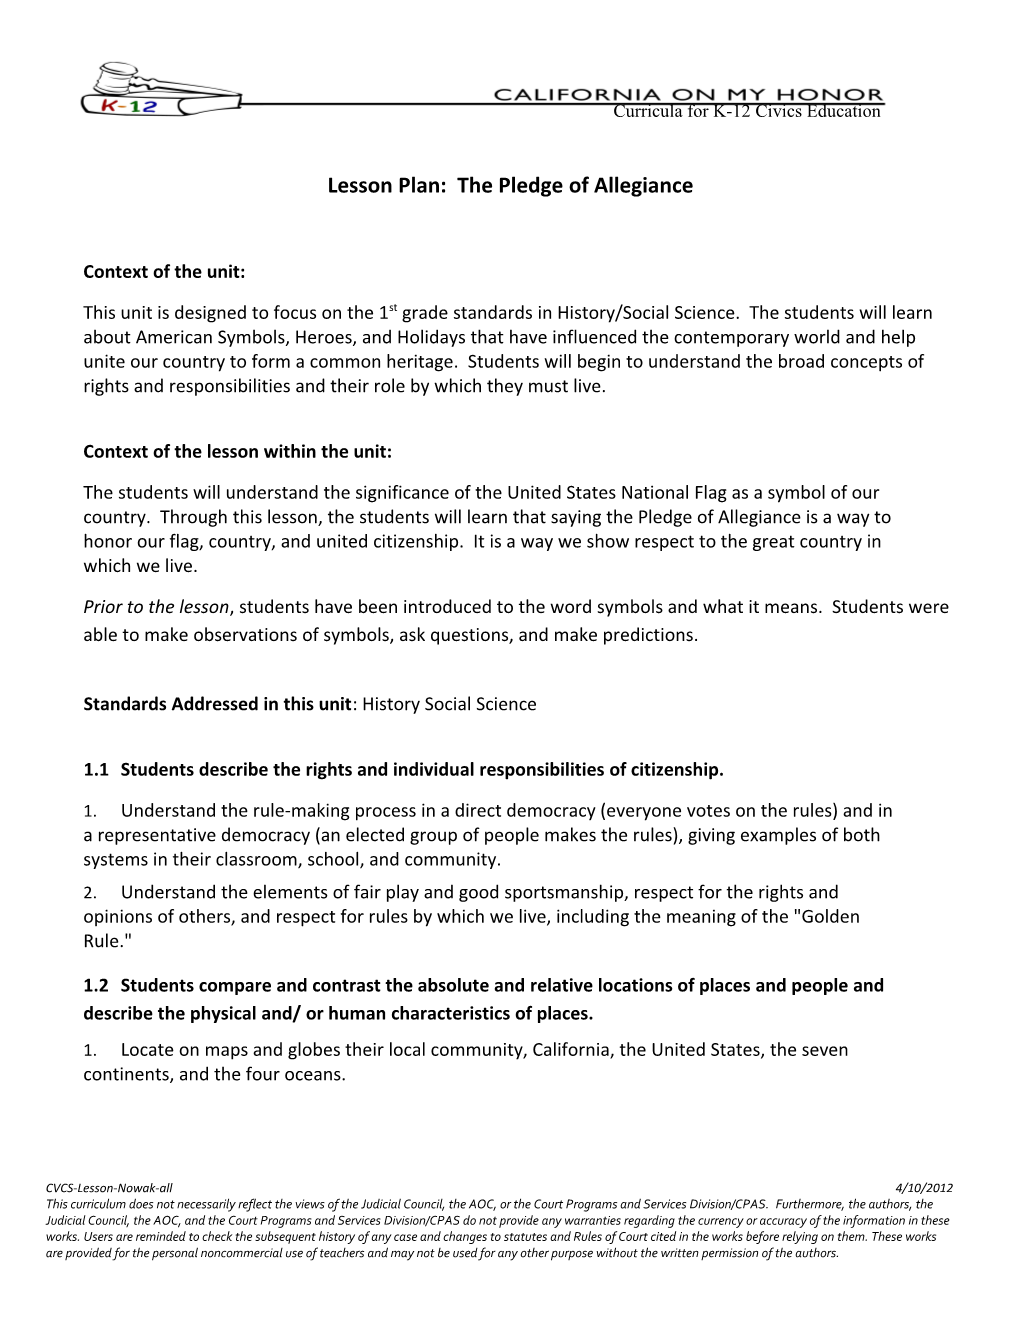 Lesson Plan: the Pledge of Allegiance